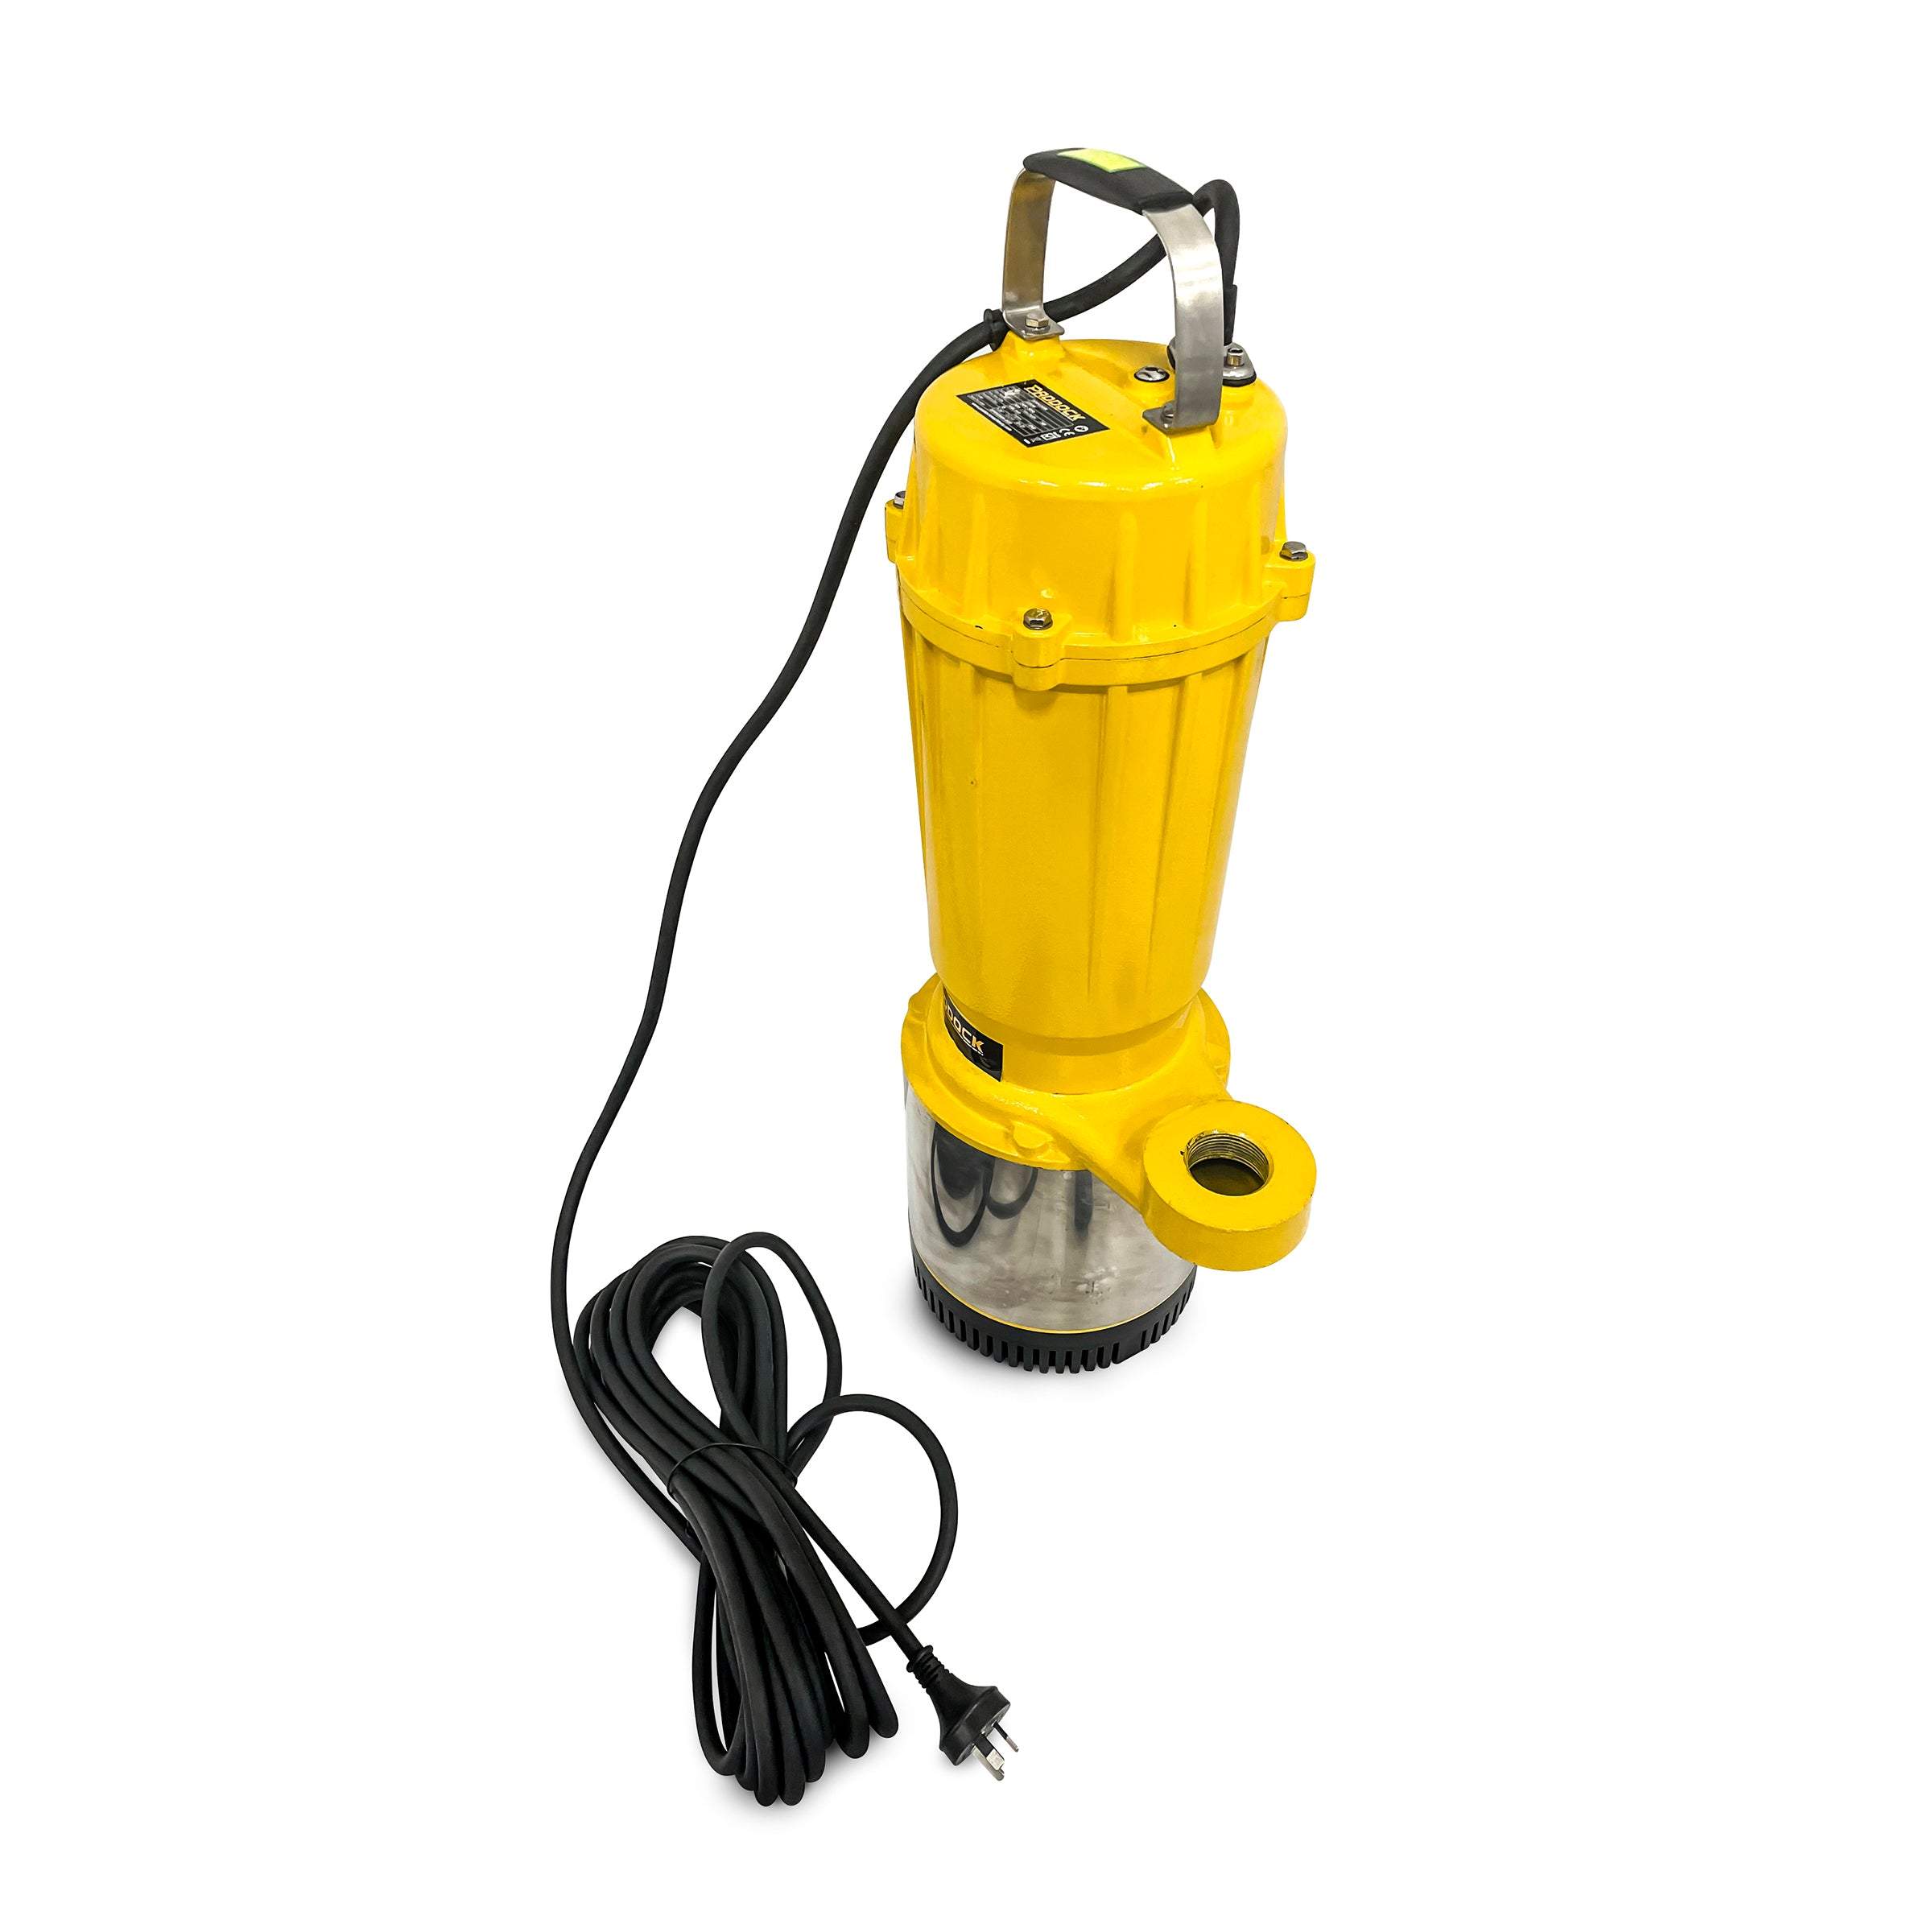 Submersible Irrigation Pump